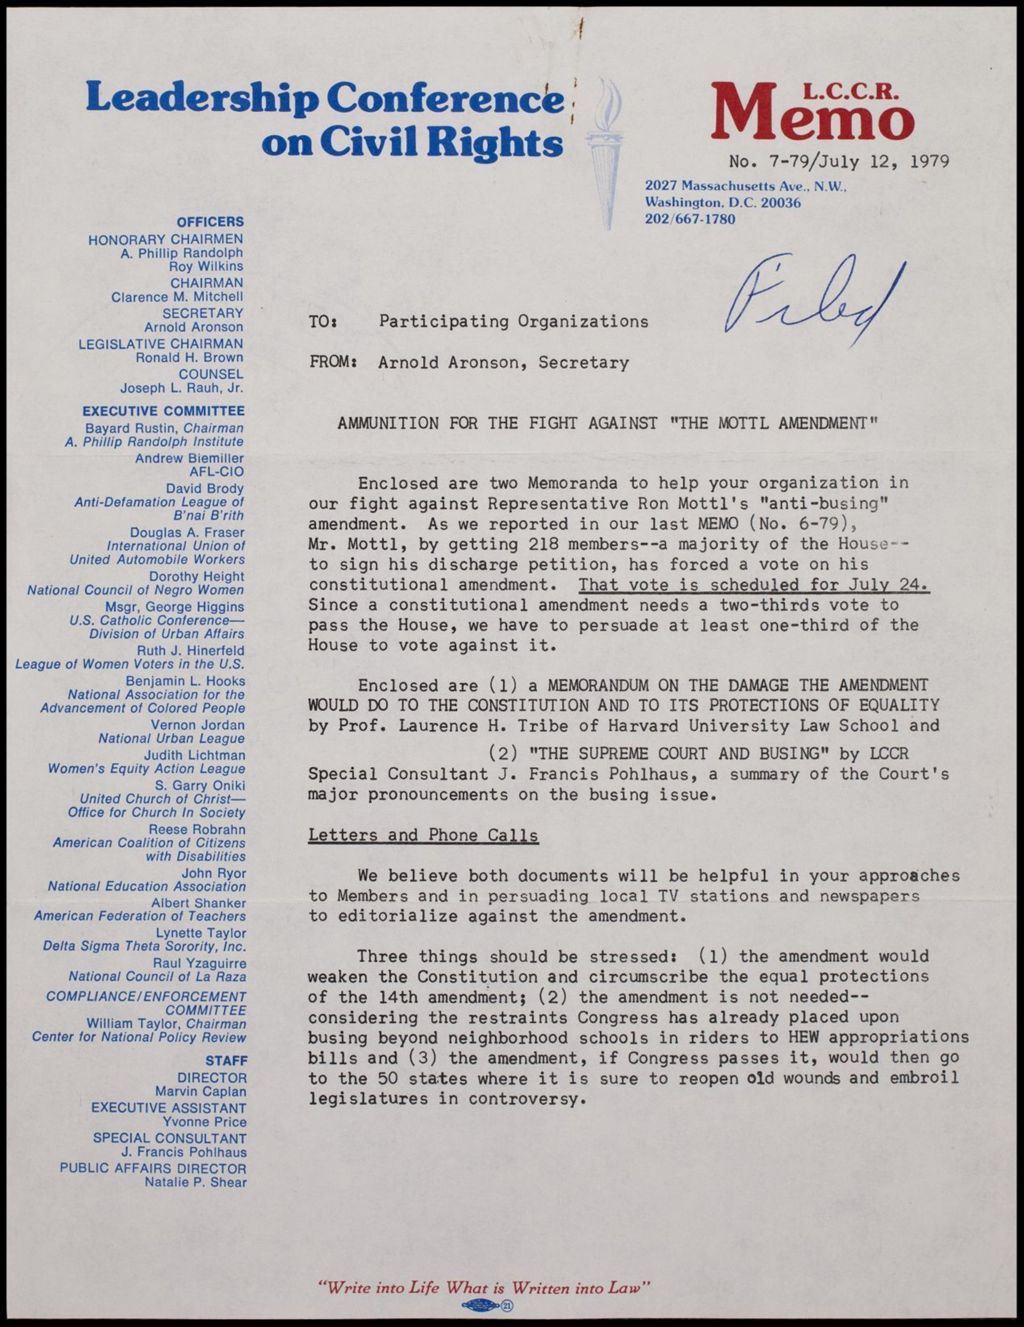 Miniature of Leadership Conference on Civil Rights, 1979 (Folder II-2224)